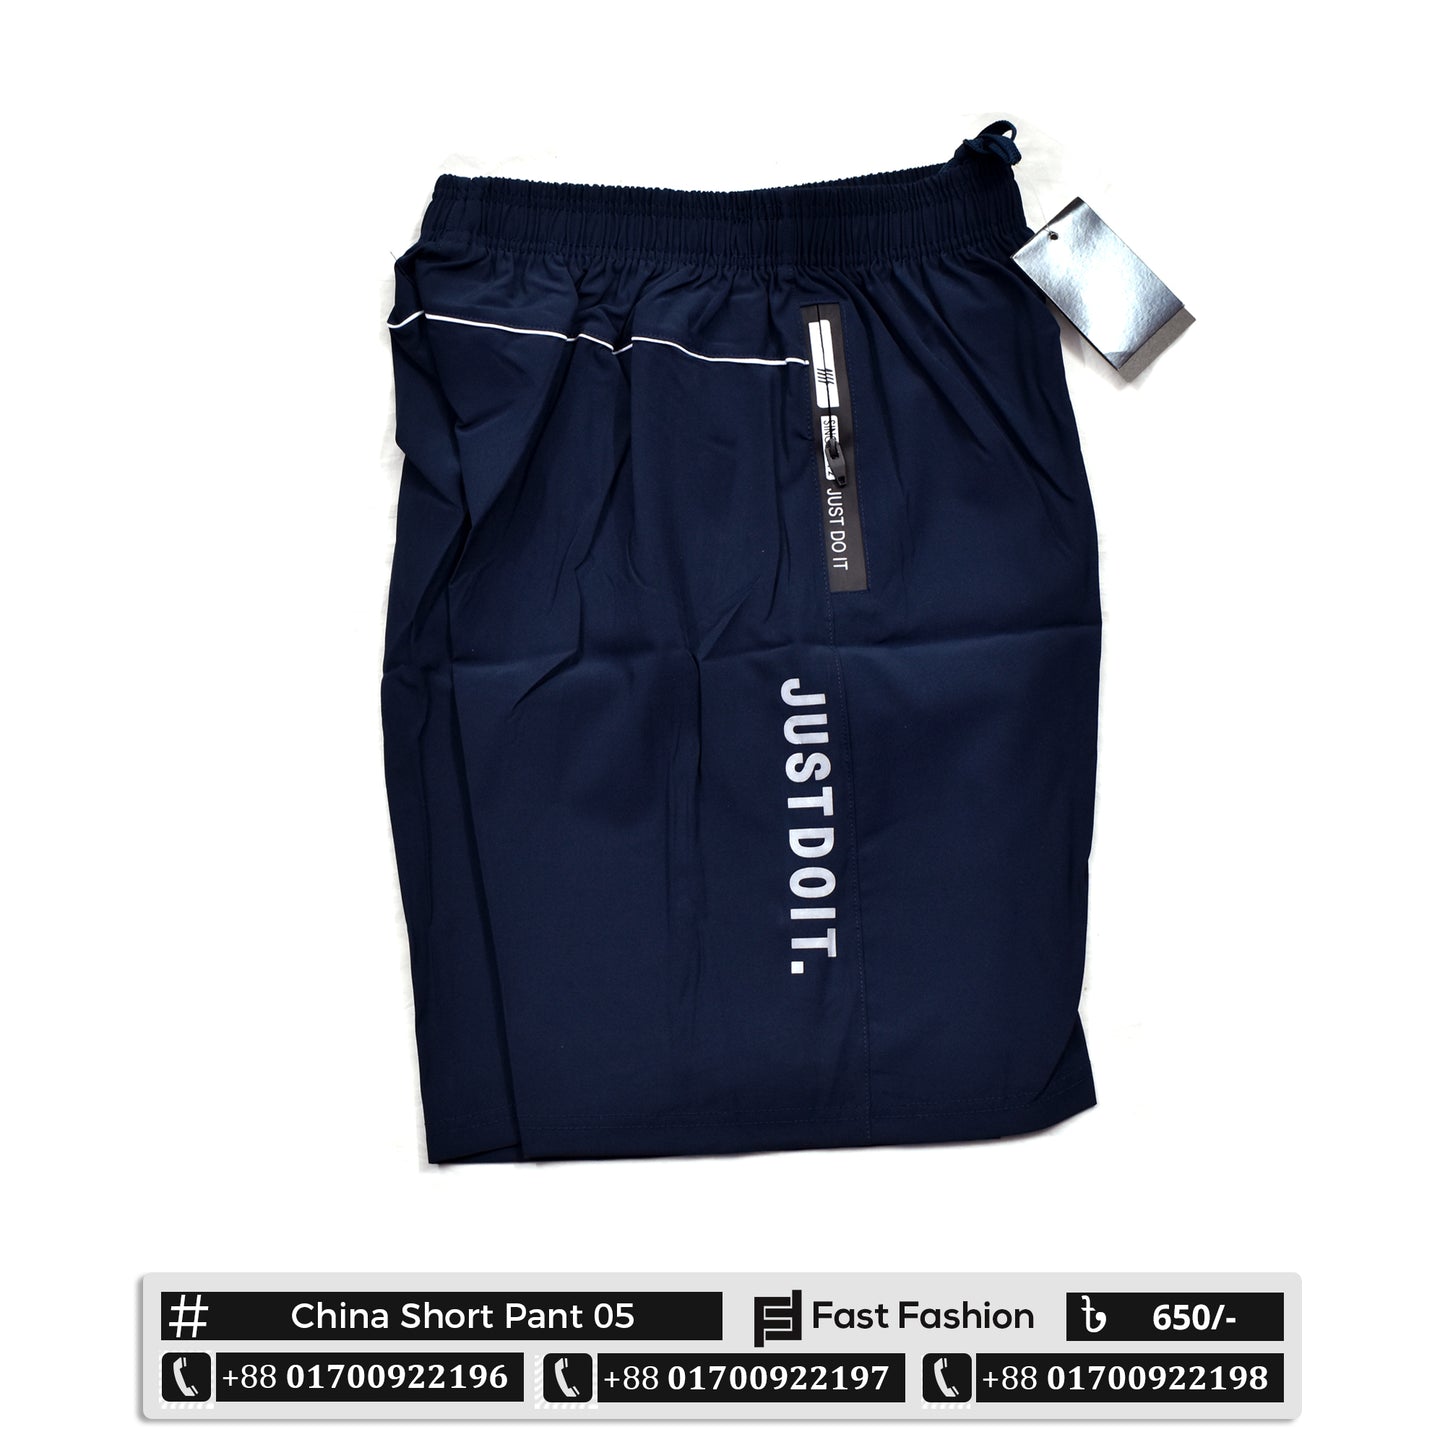 China Short Pant | Premium Quality Short Pant | China Short Pant 05